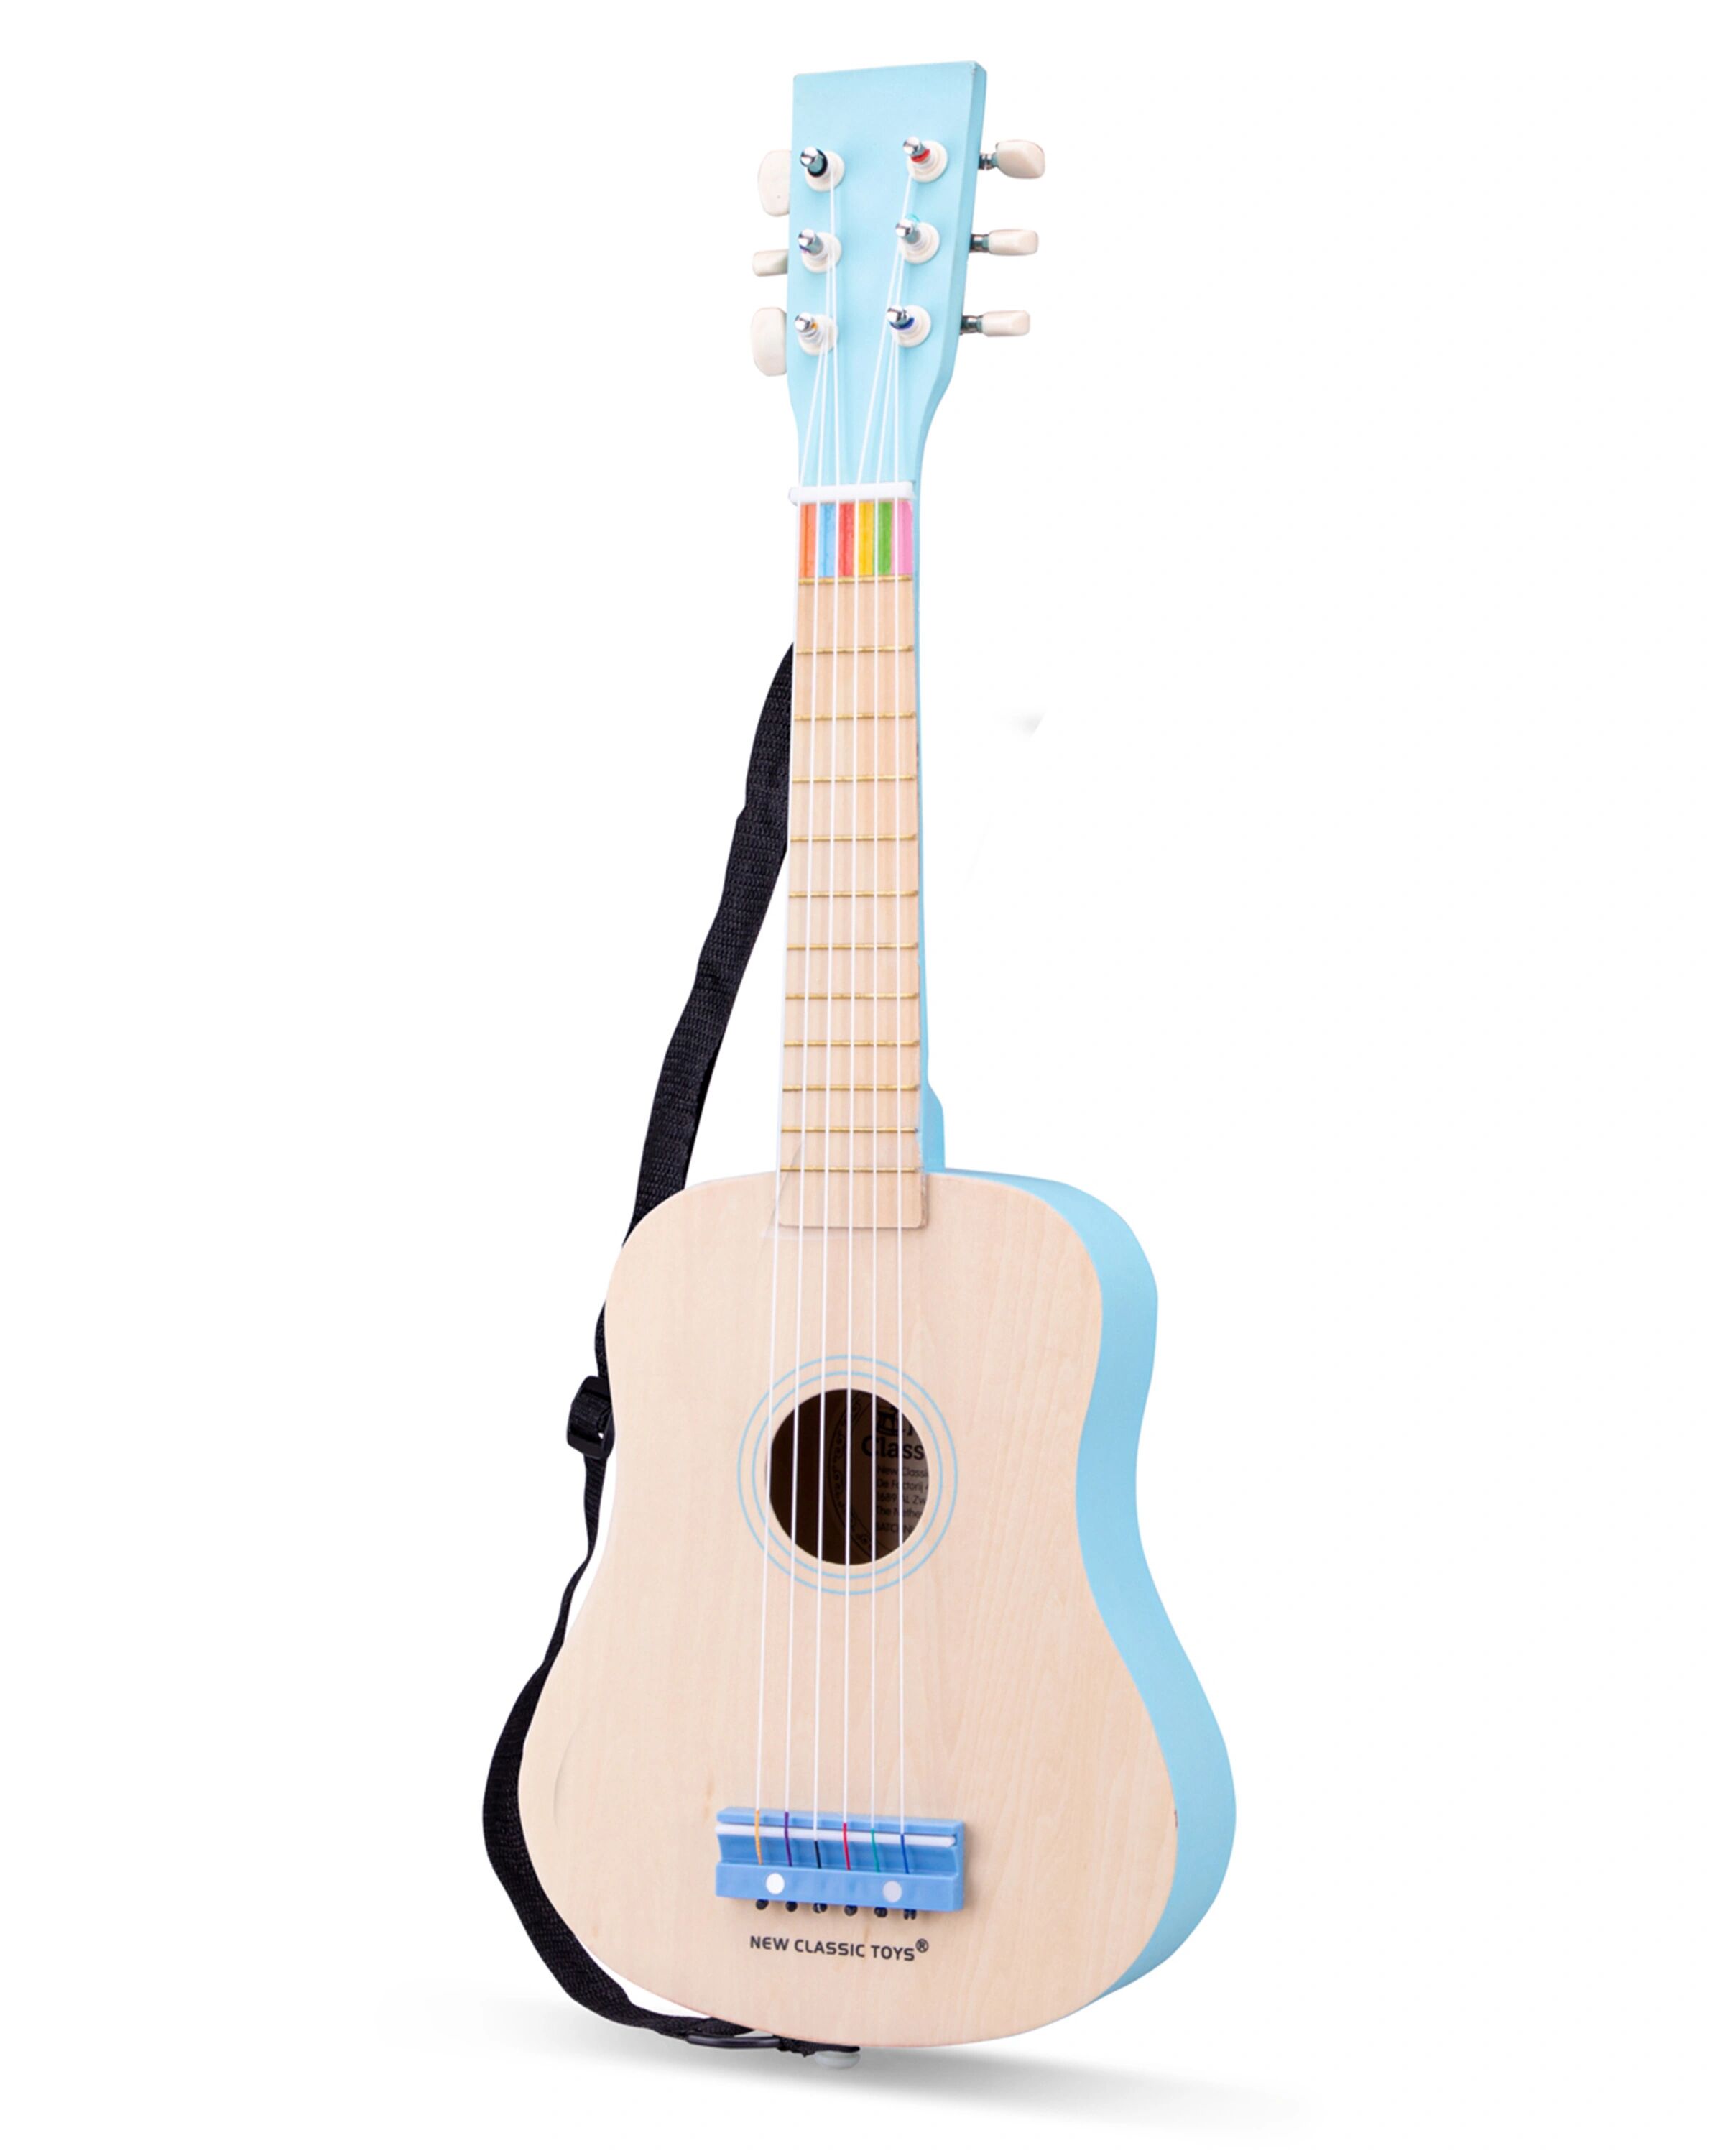 New Classic Toys Gitarre in natur/blau